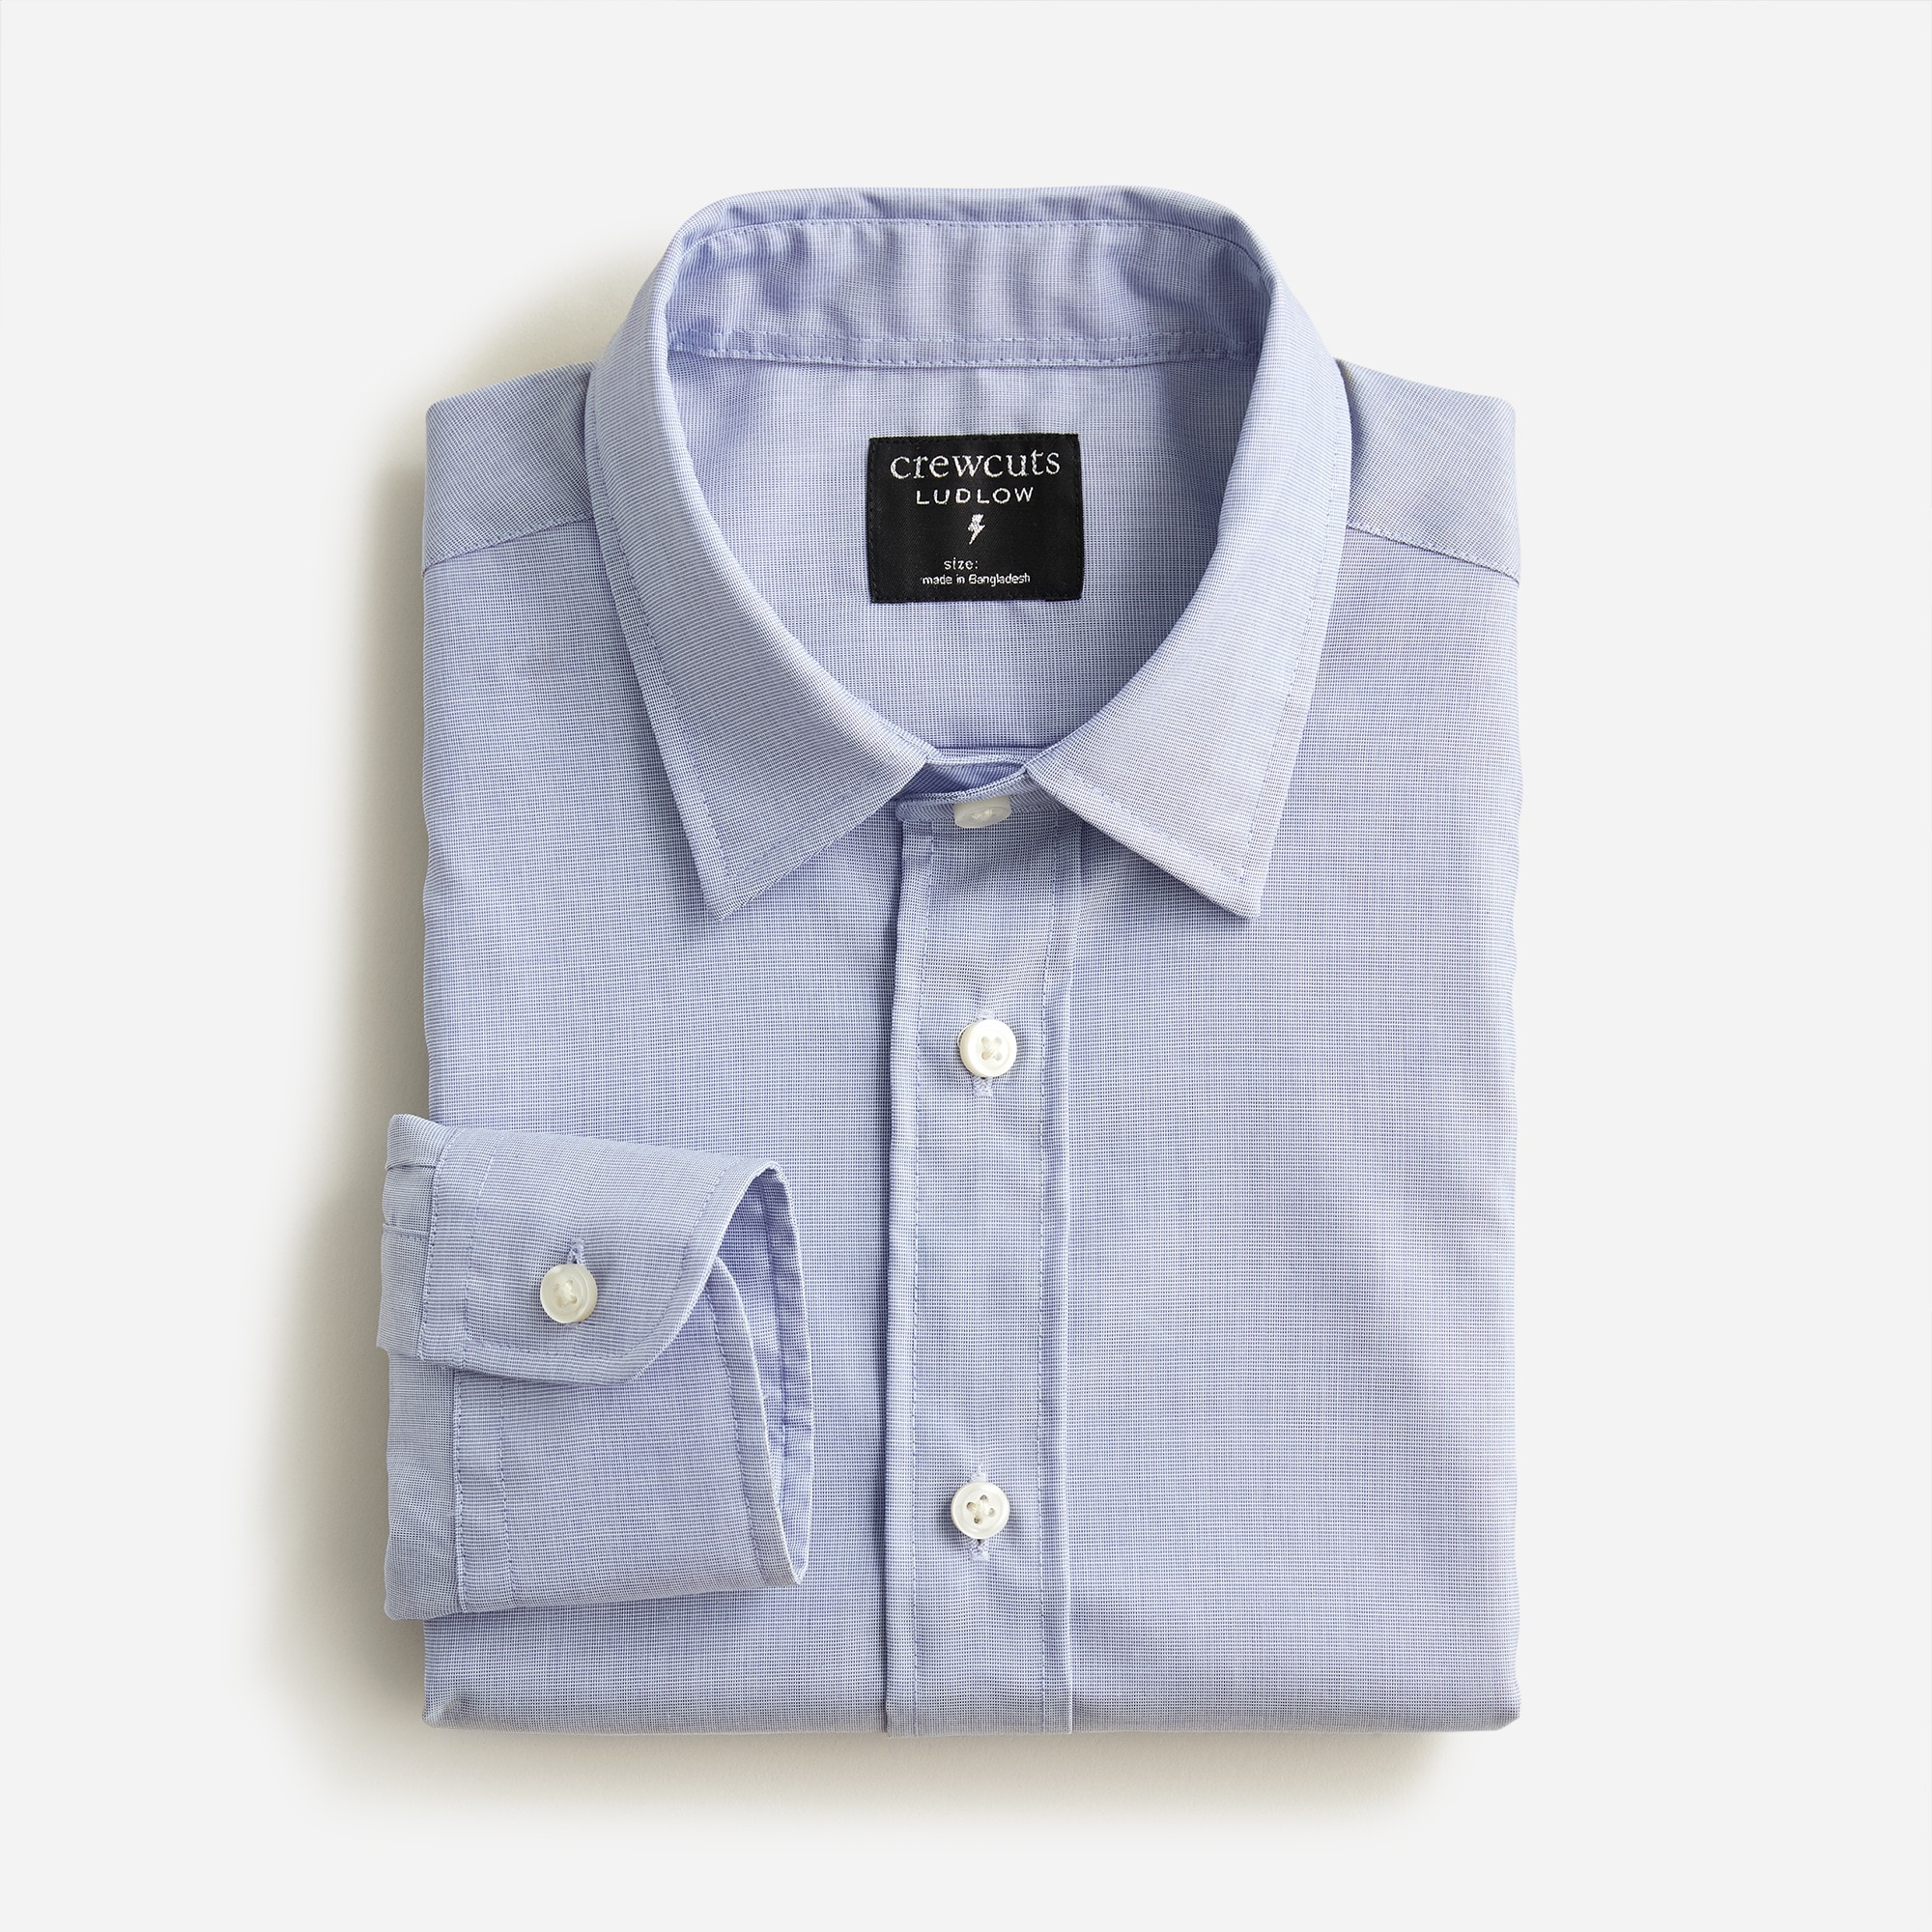  Boys' Ludlow Premium fine cotton dress shirt